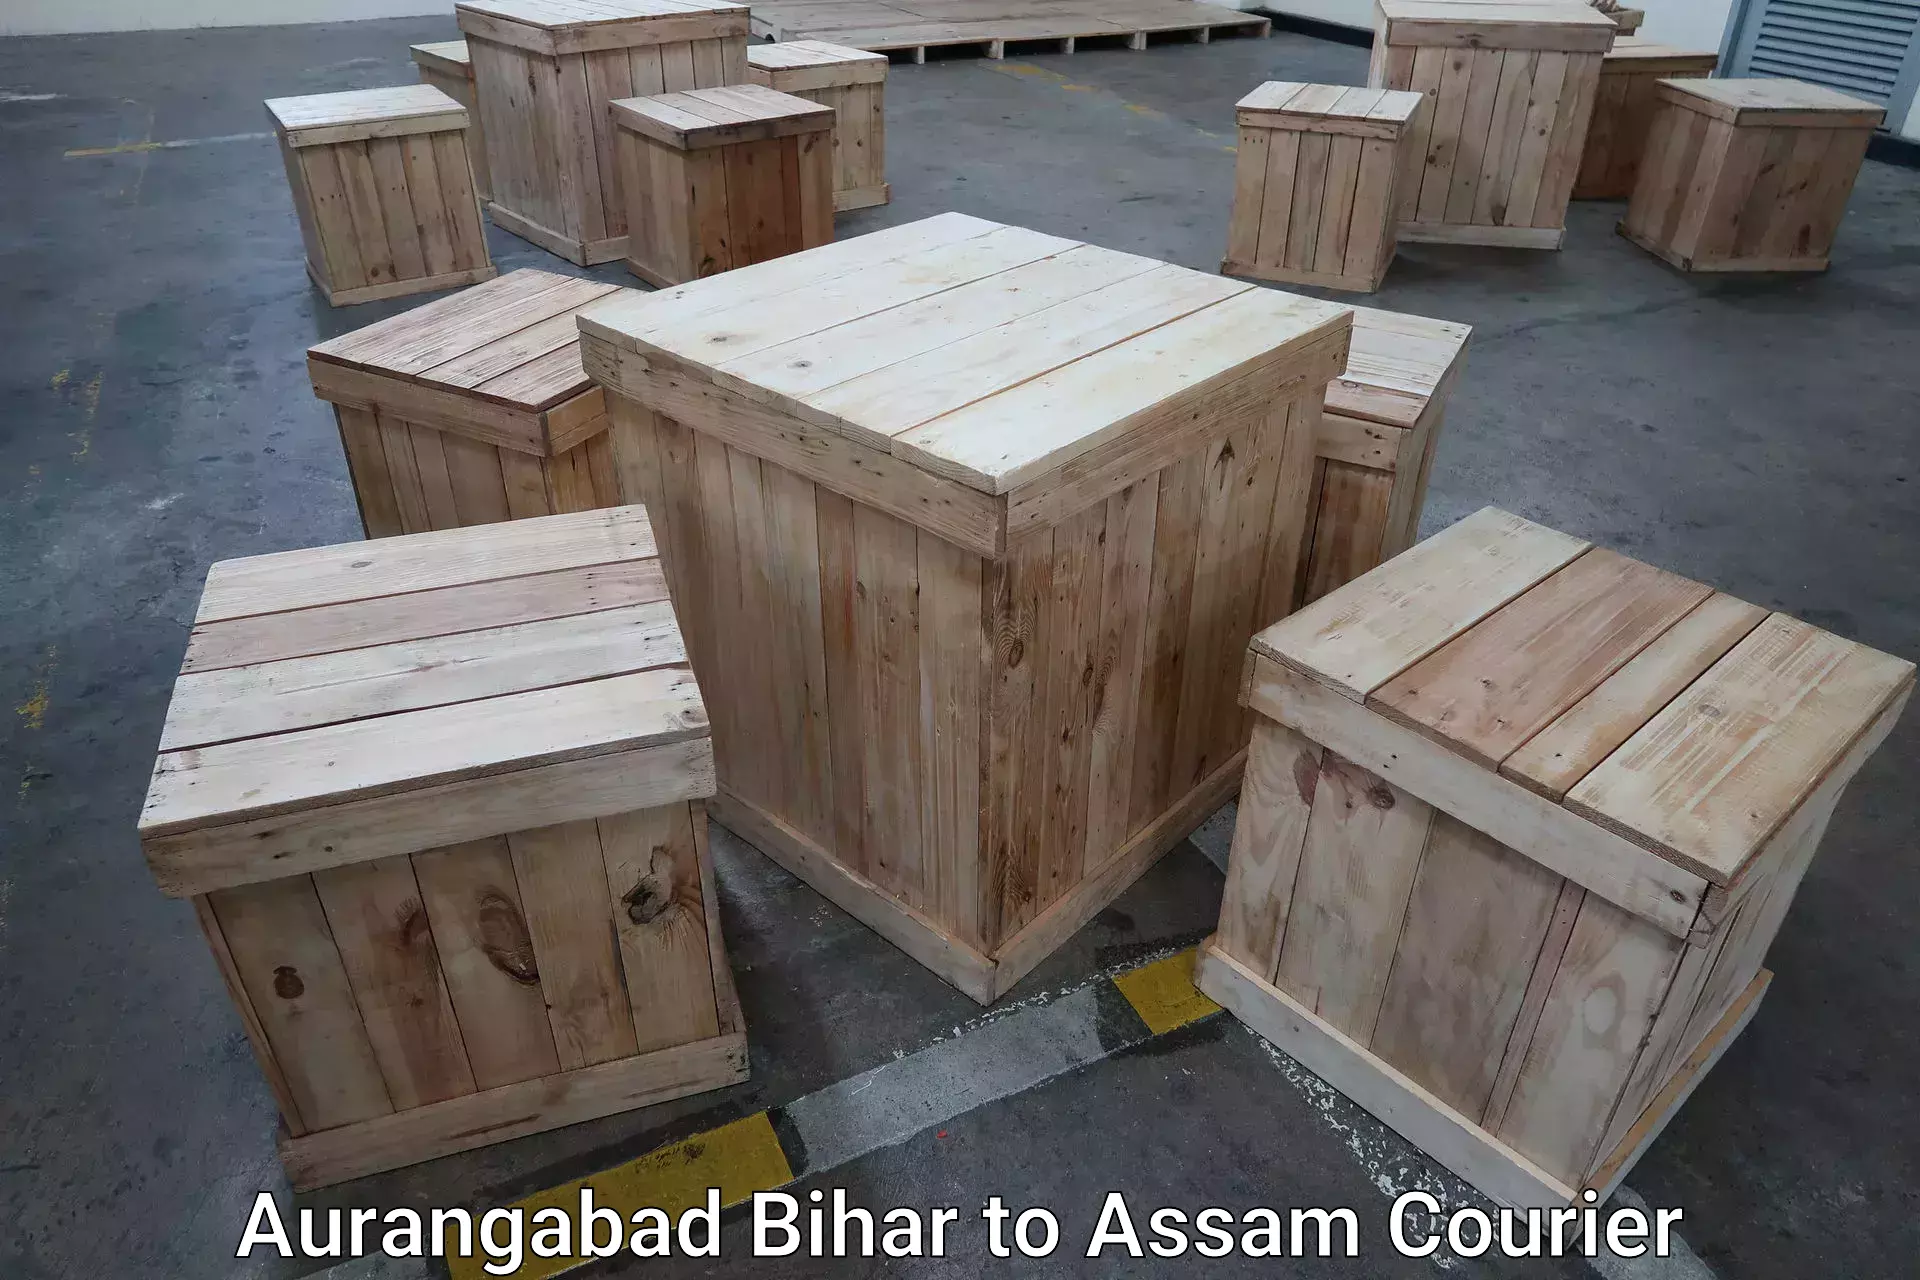 Luggage delivery system Aurangabad Bihar to Assam